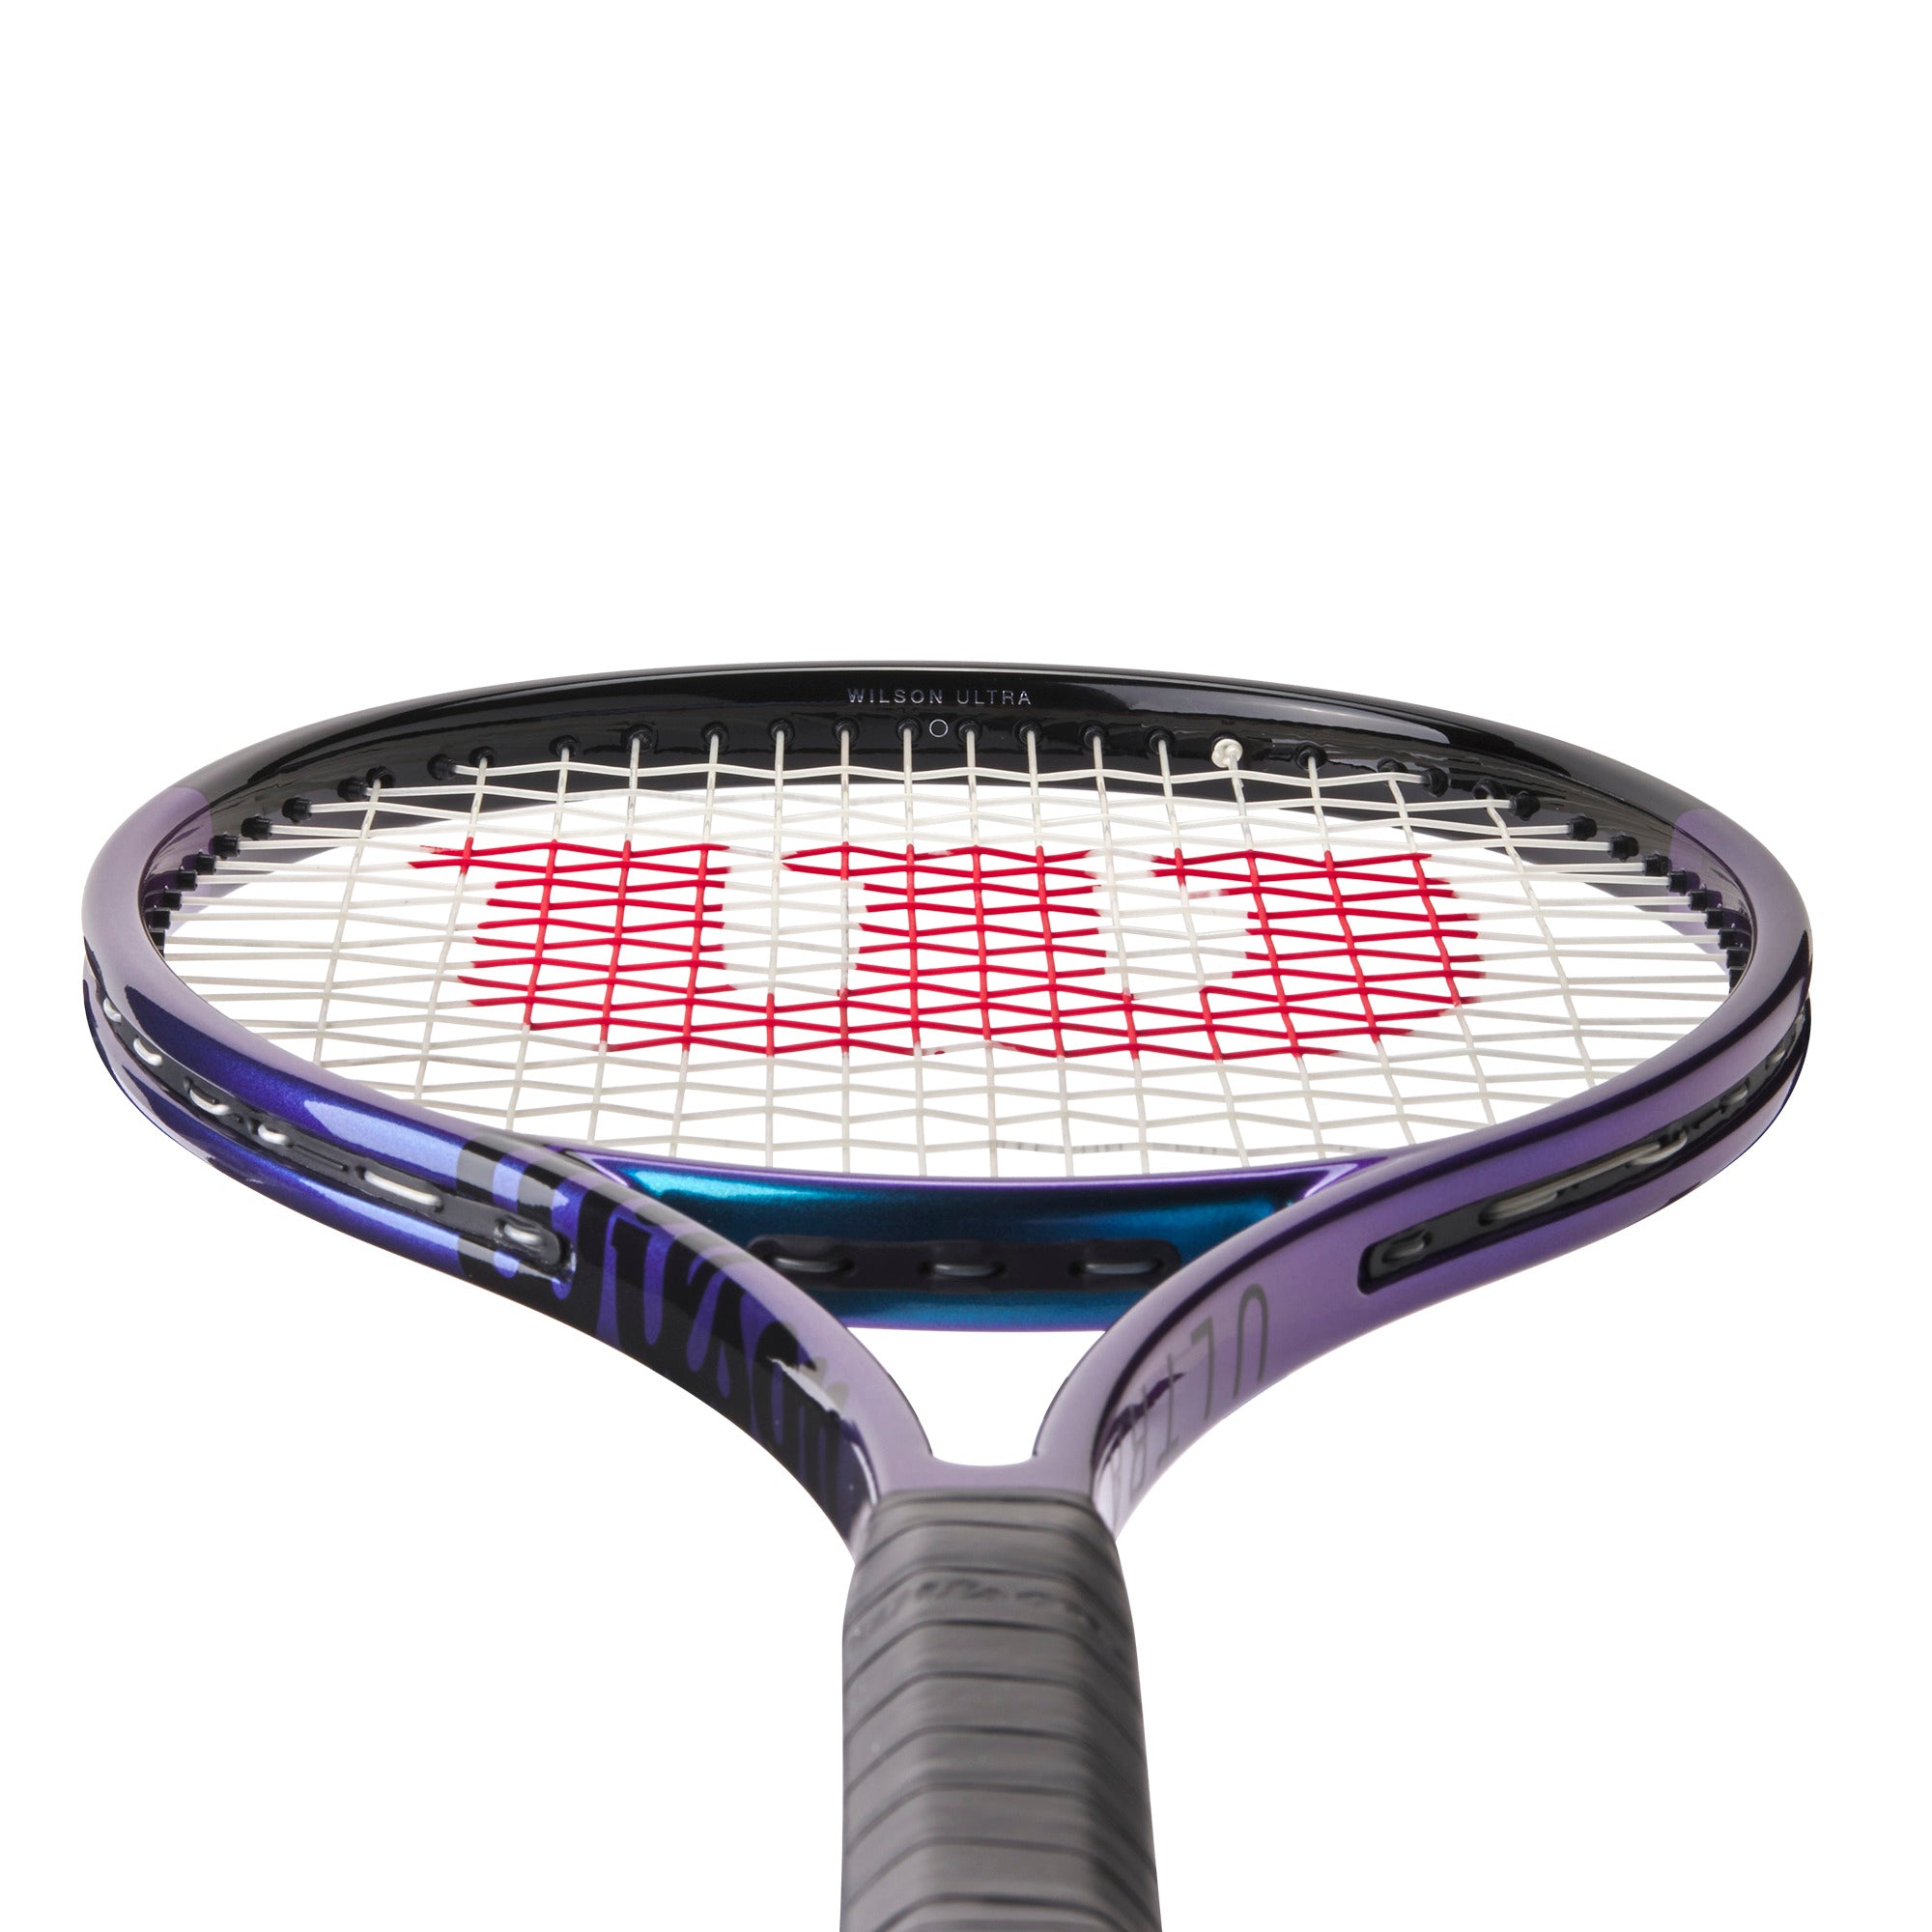 Ultra Pro (16x19) v4 Tennis Racket Frame